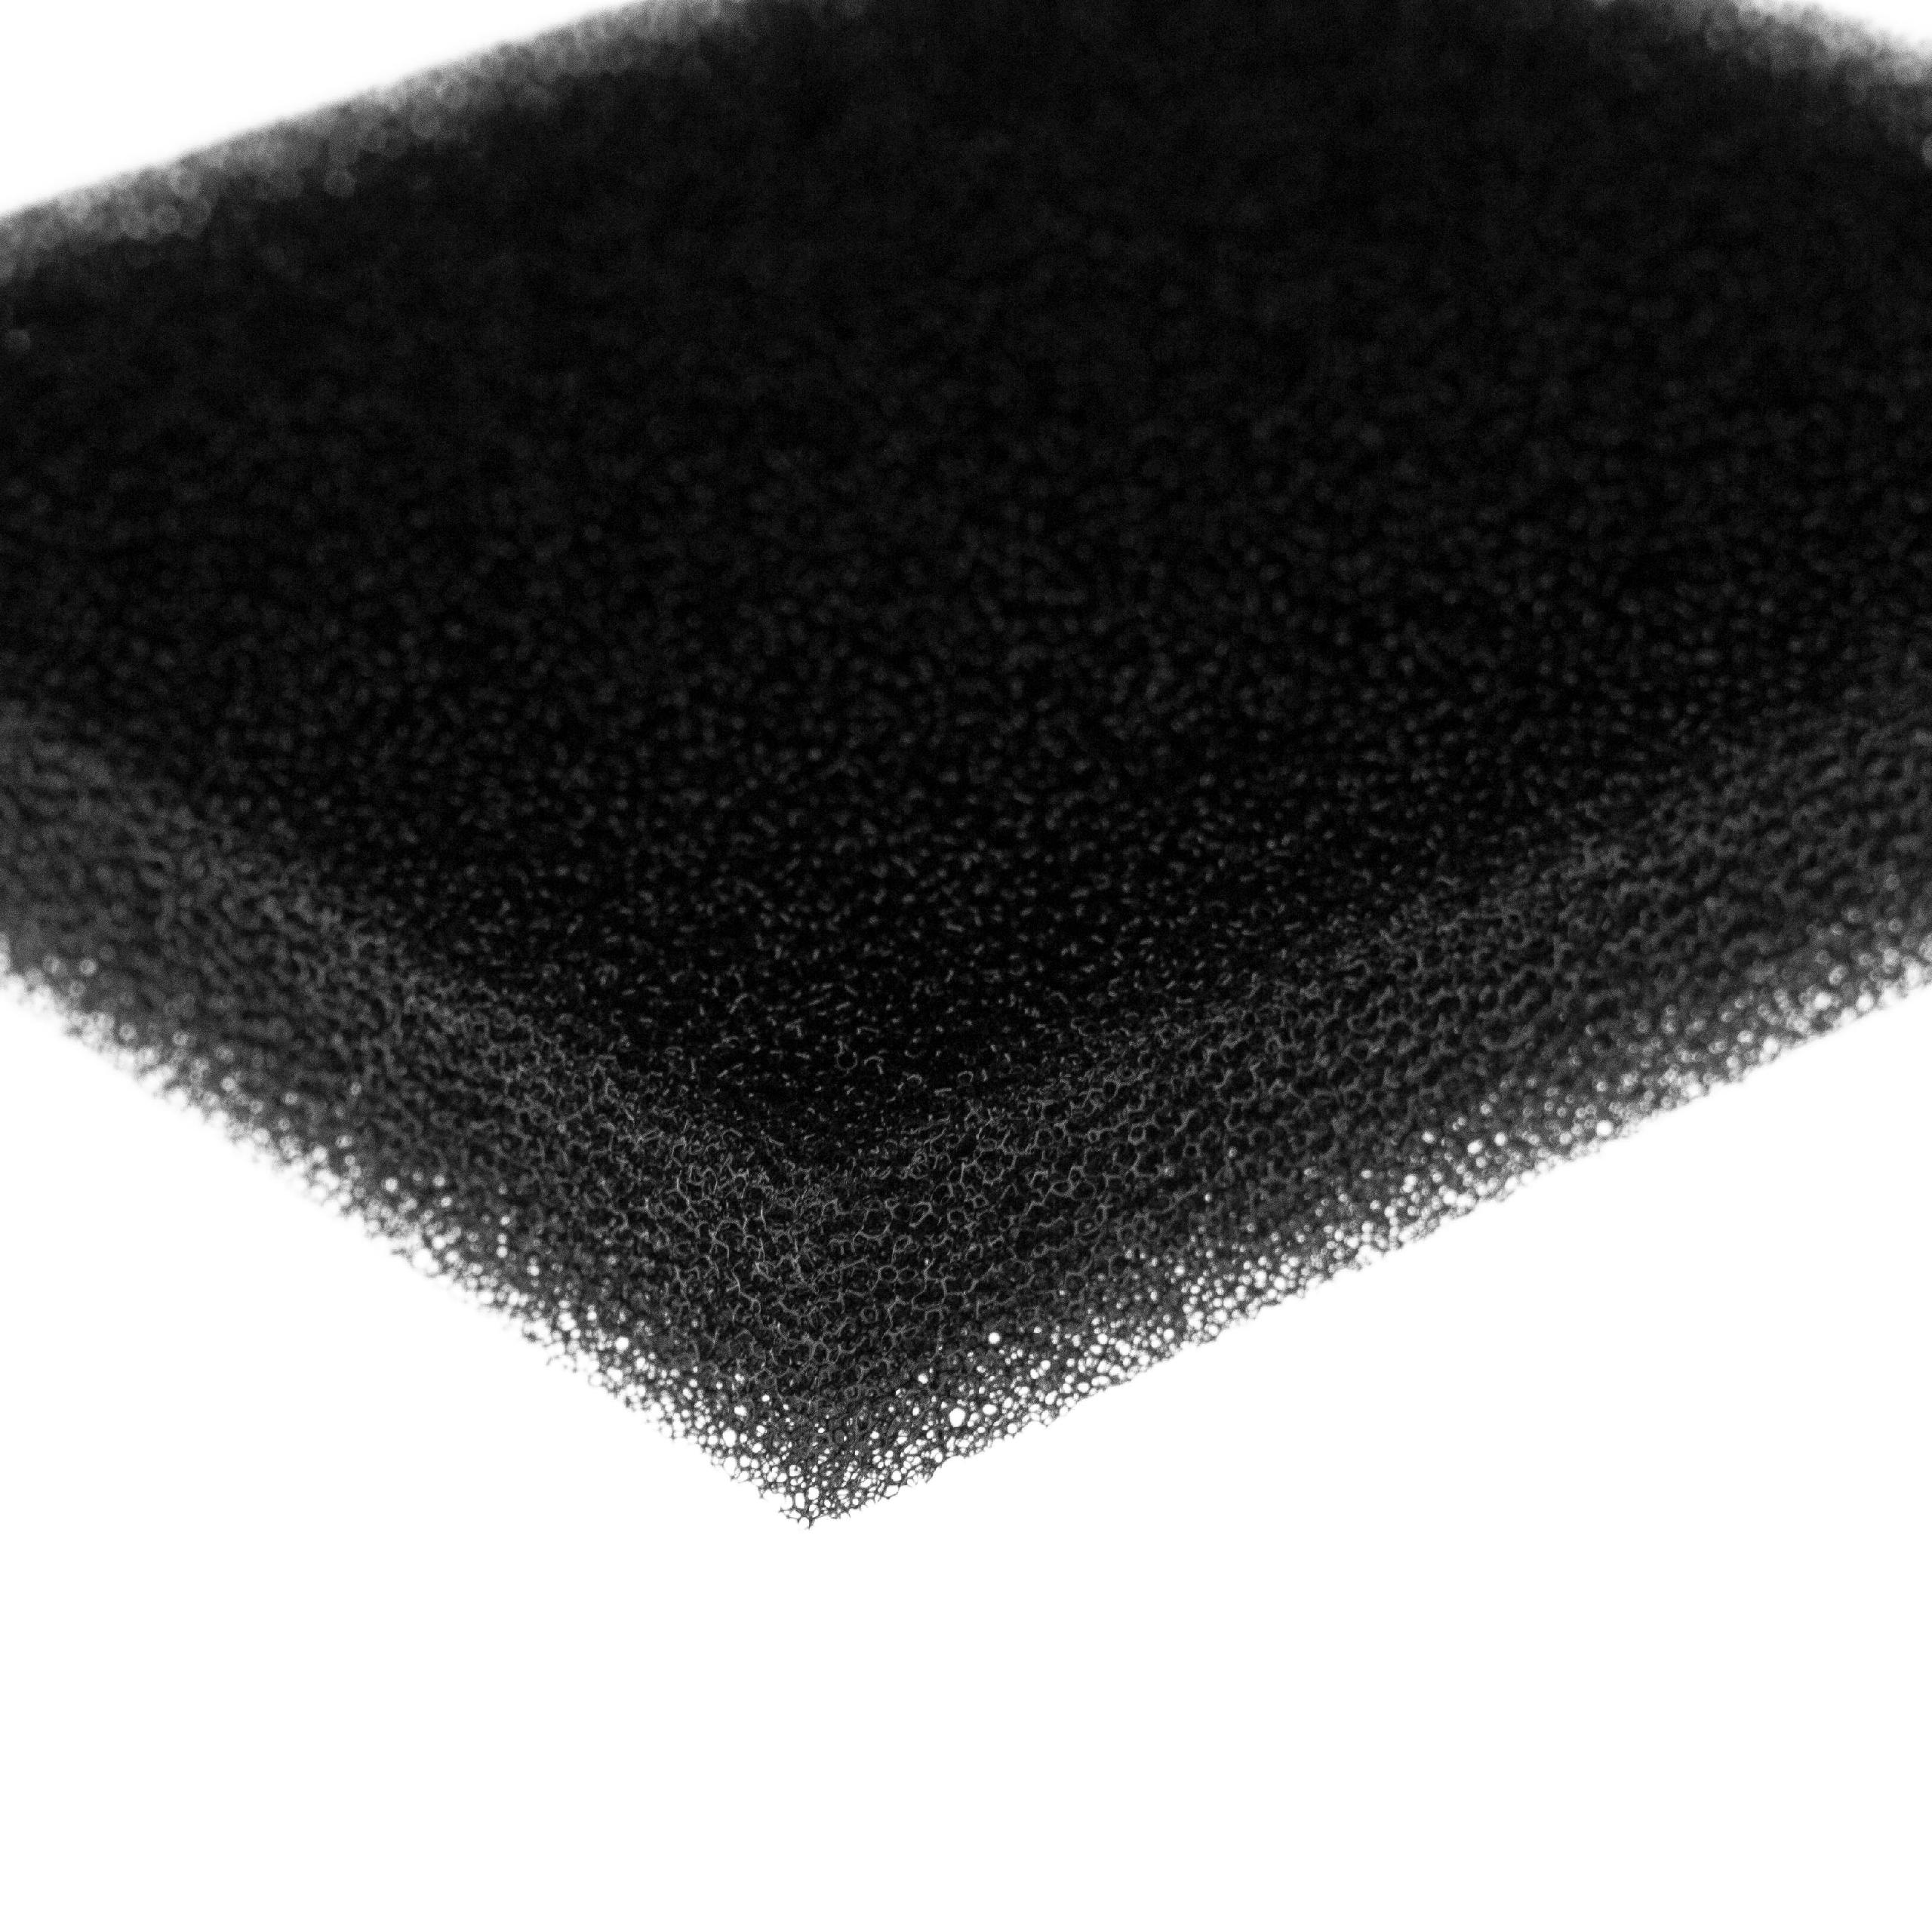 1x foam filter replaces Bosch/Siemens 483333 for Bosch Vacuum Cleaner